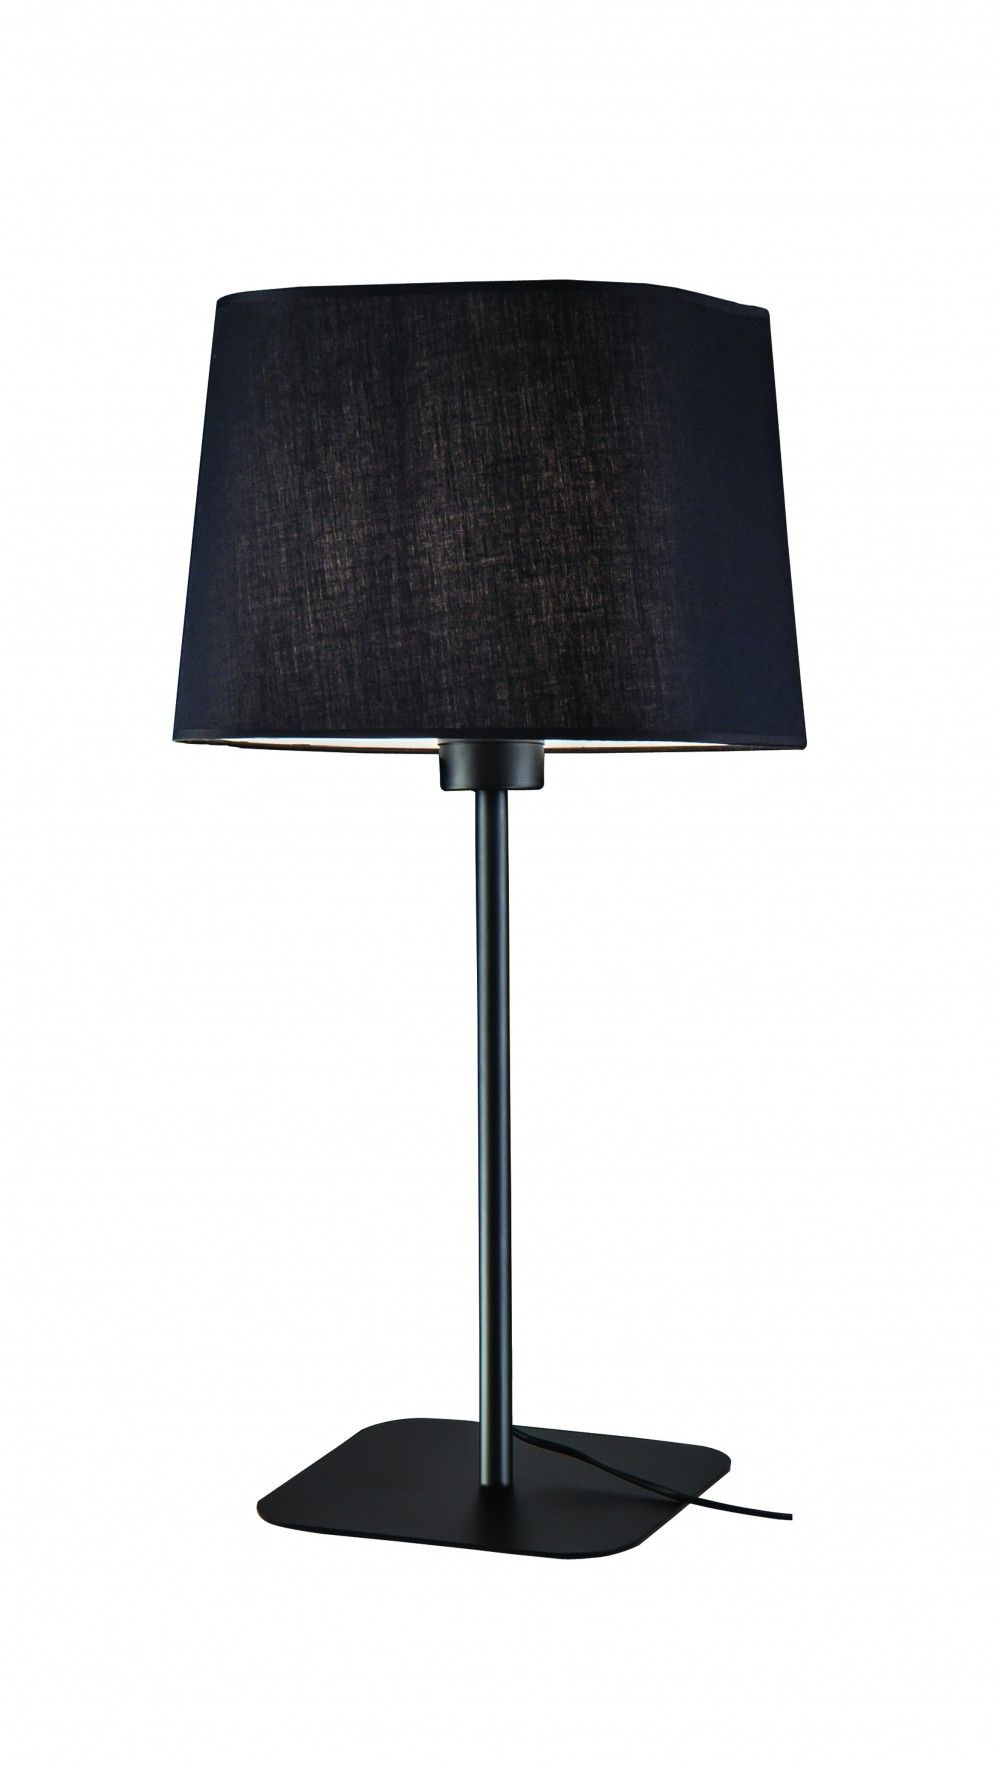 VIOKEF Table Lamp Black Hendrix - VIO-4174701